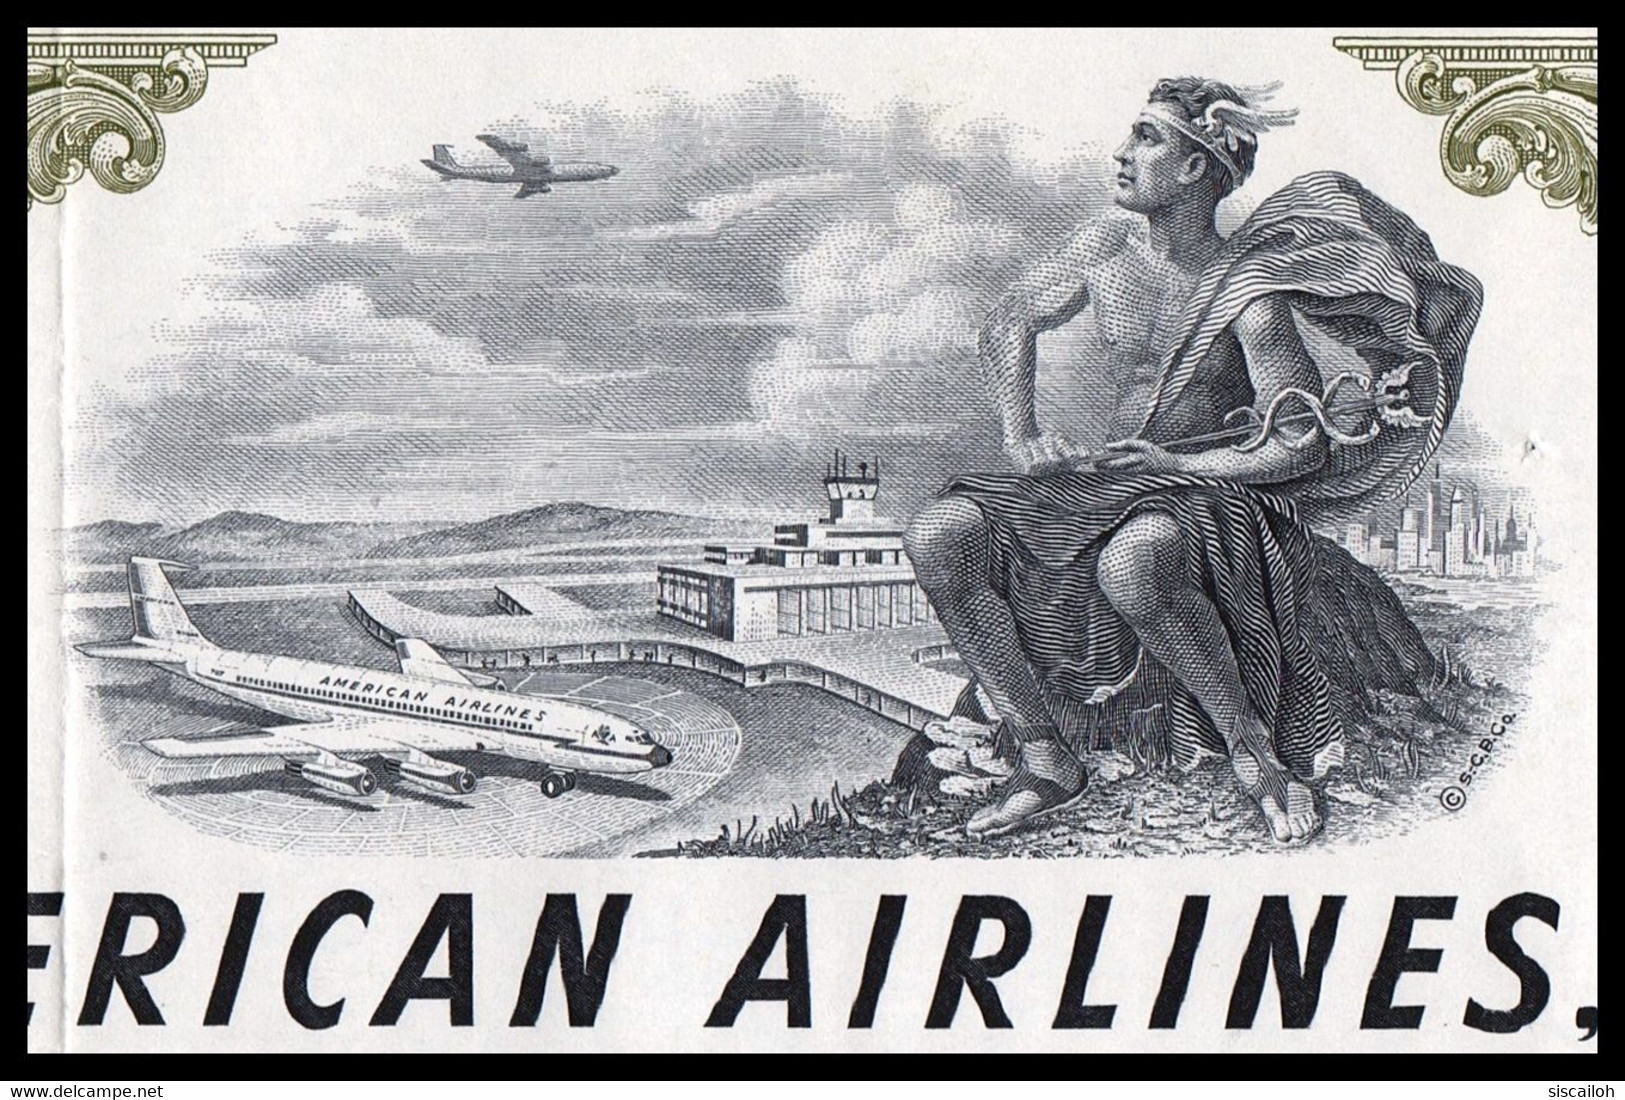 1967 American Airlines, Inc. - $100 Bond Certificate - Aviation